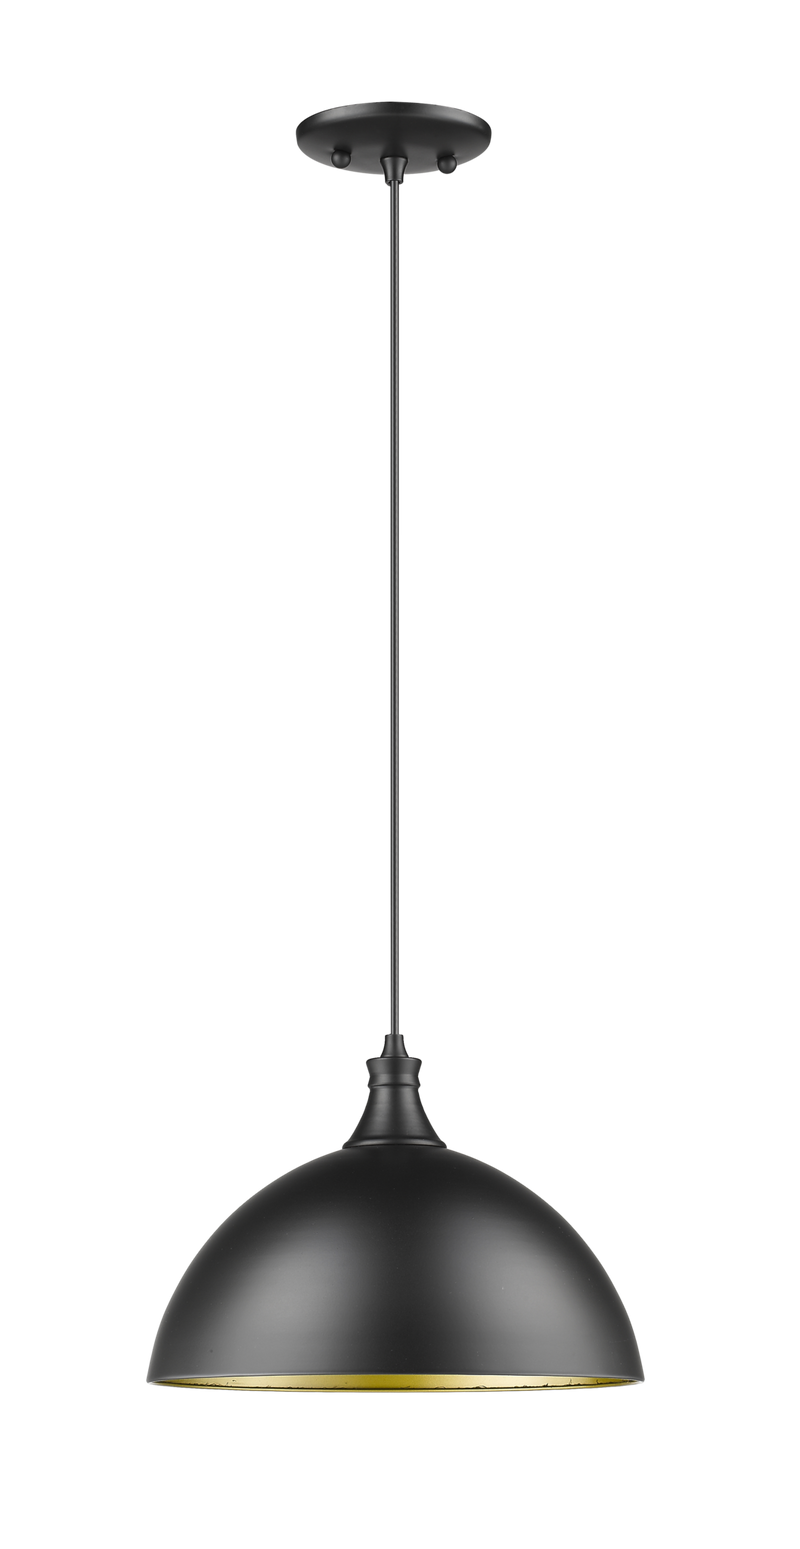 12 inch modern black pendant light